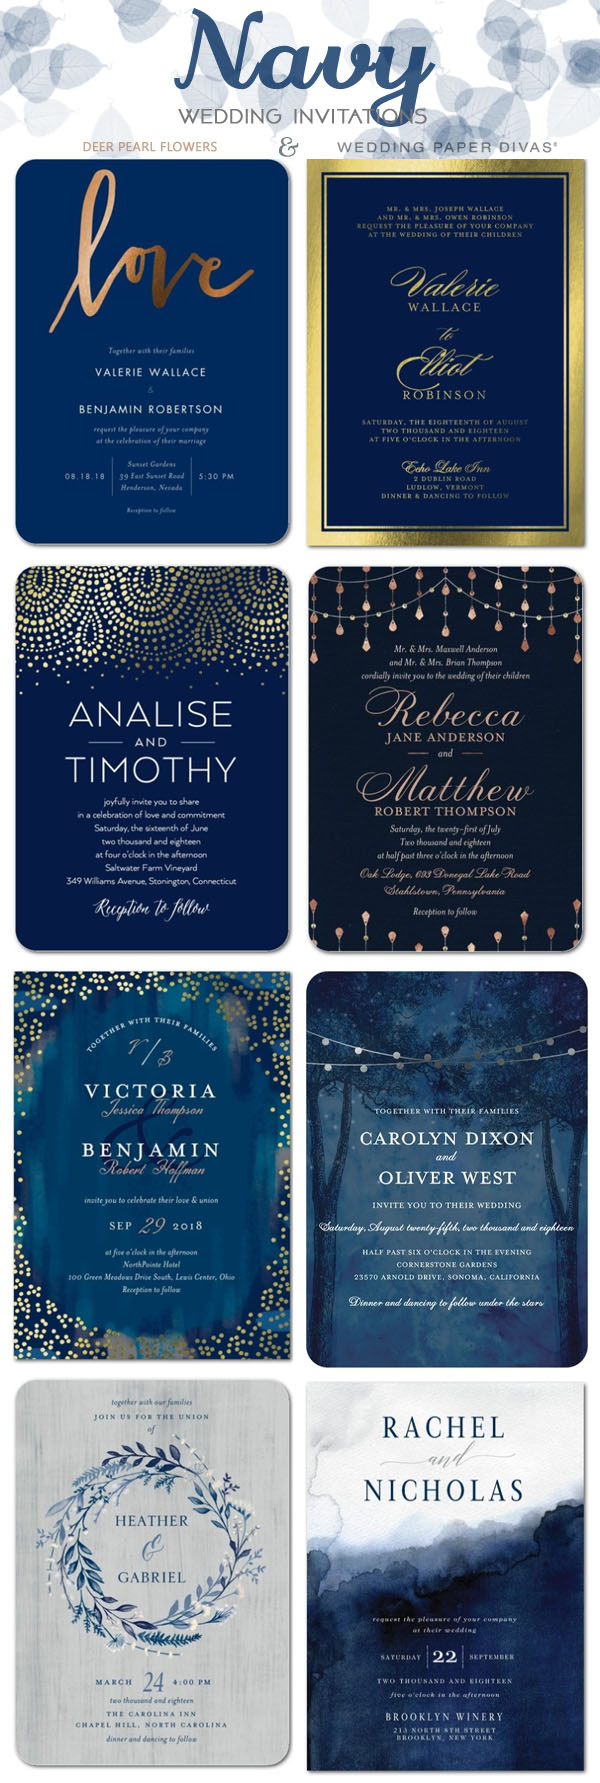 Navy blue wedding color ideas - navy blue wedding invitations